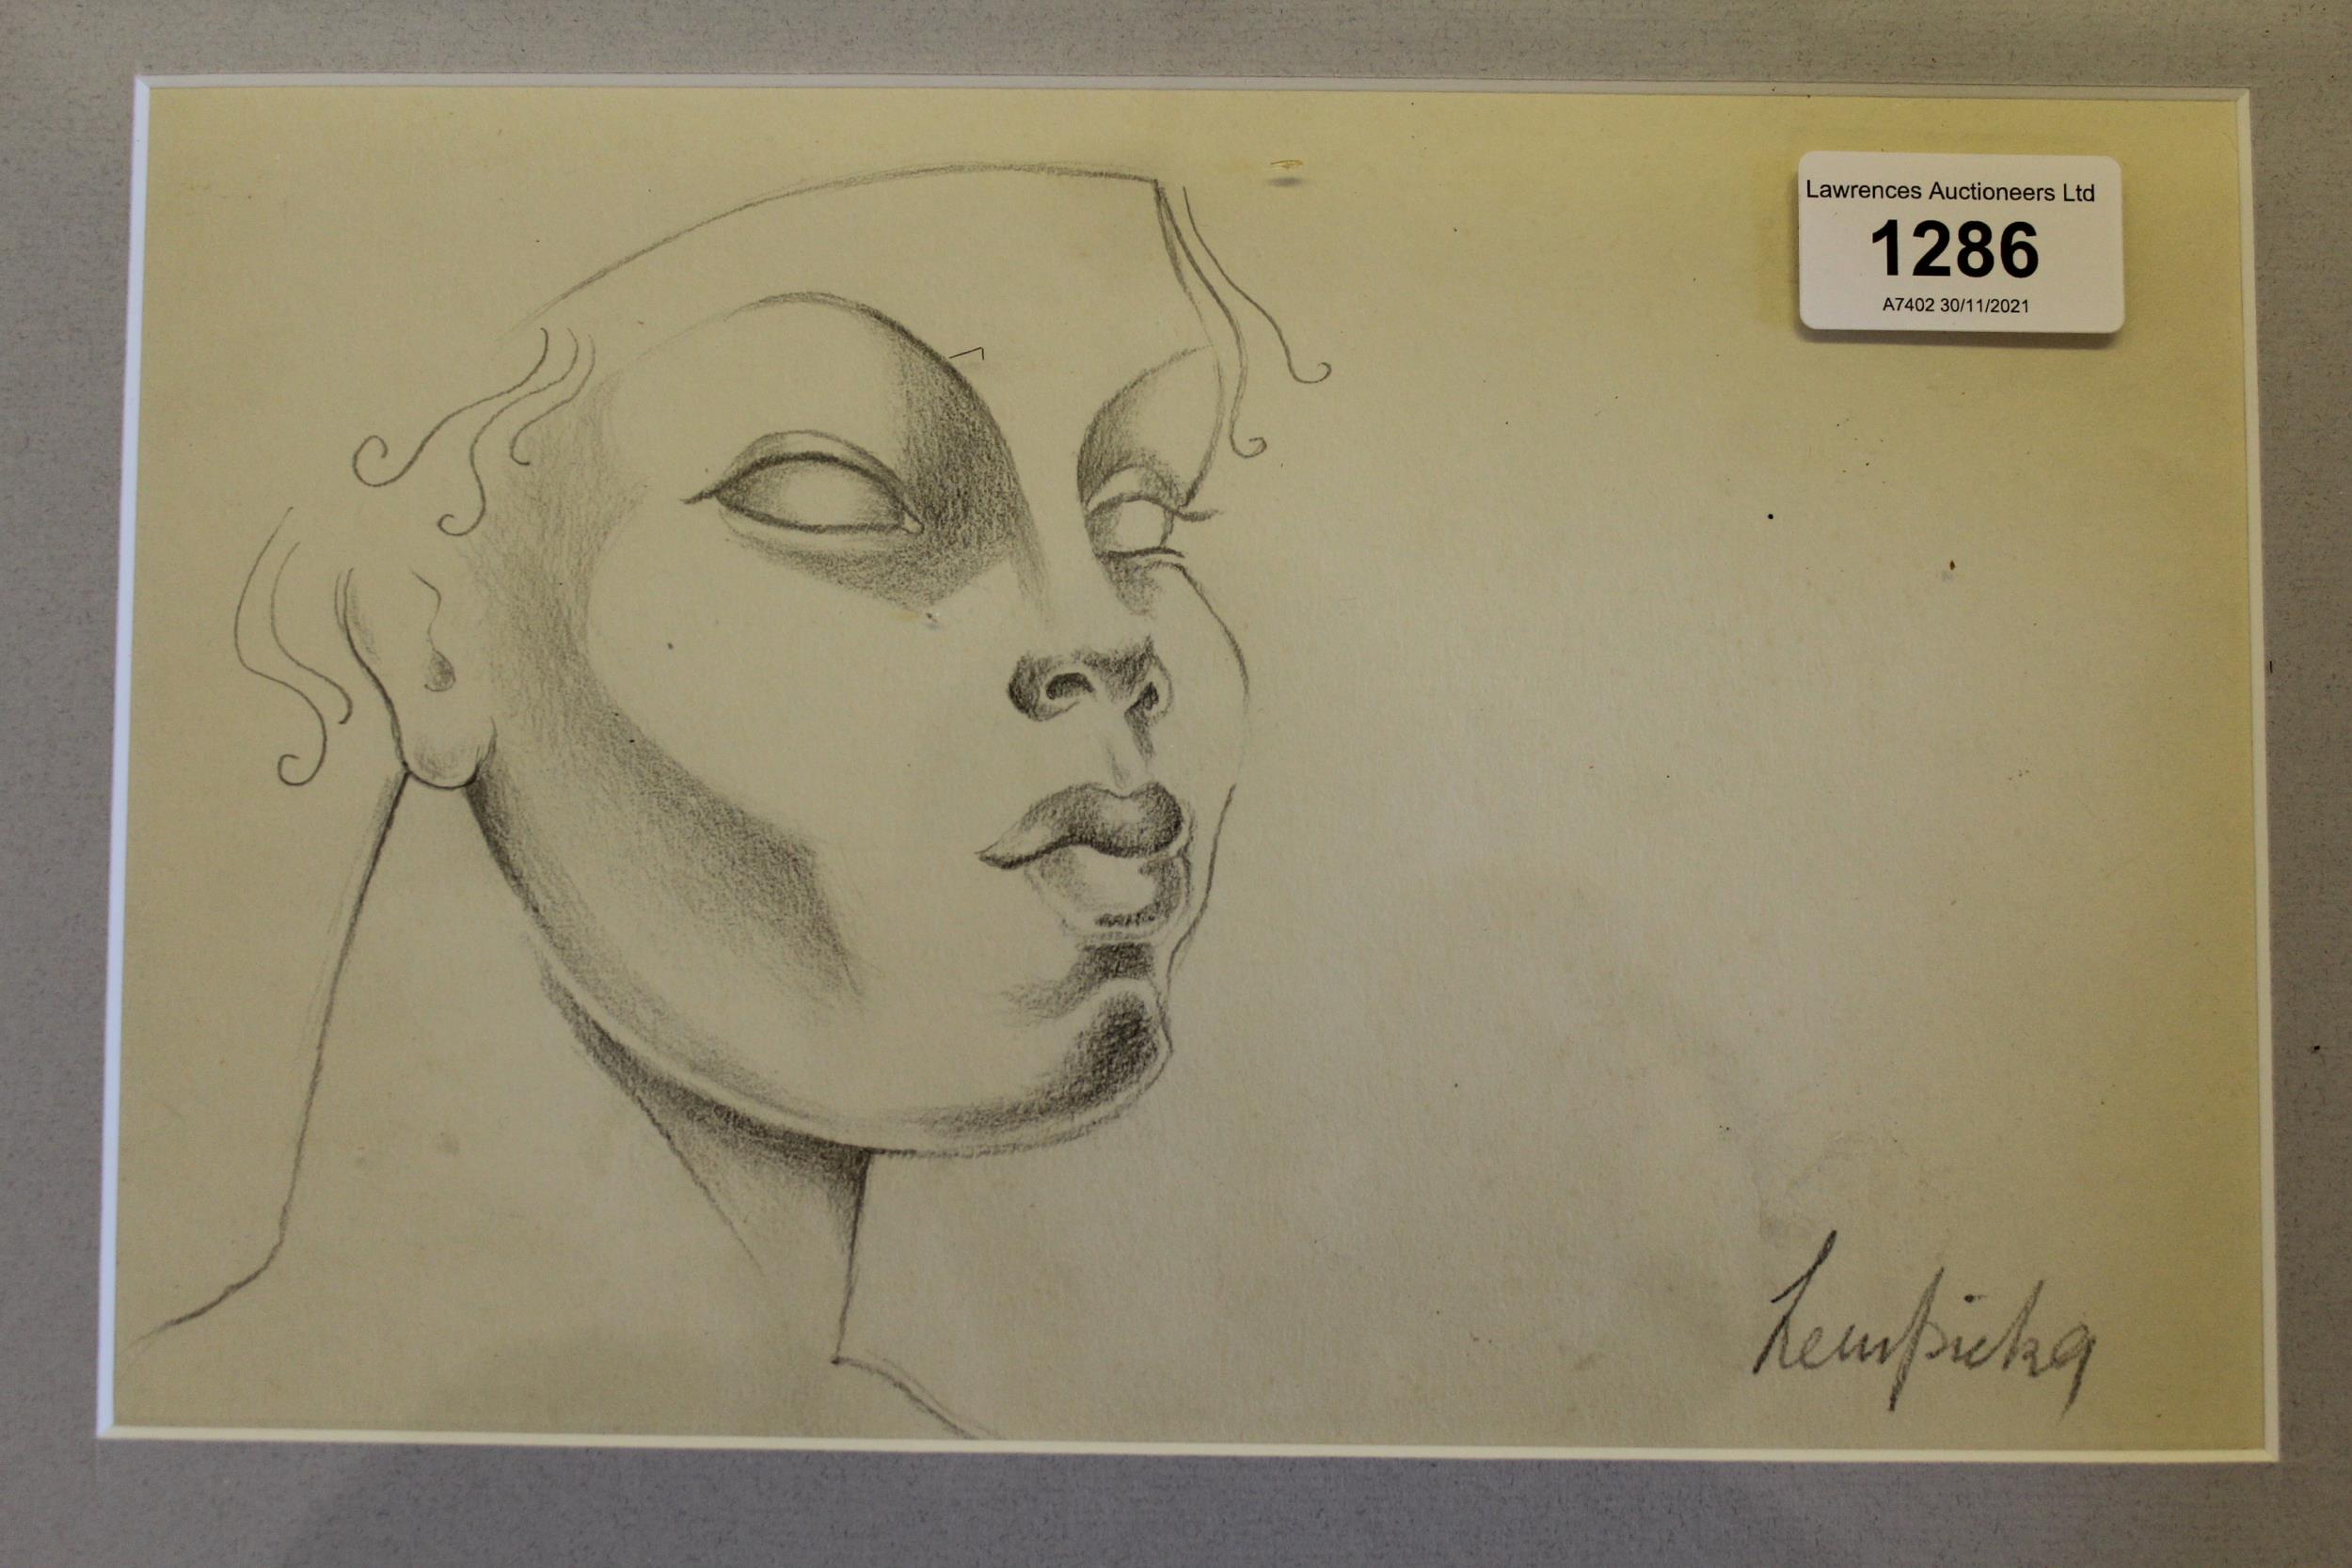 After Tamara de Lempicka, pencil drawing, study of a female face, bearing signature, 6ins x 9.